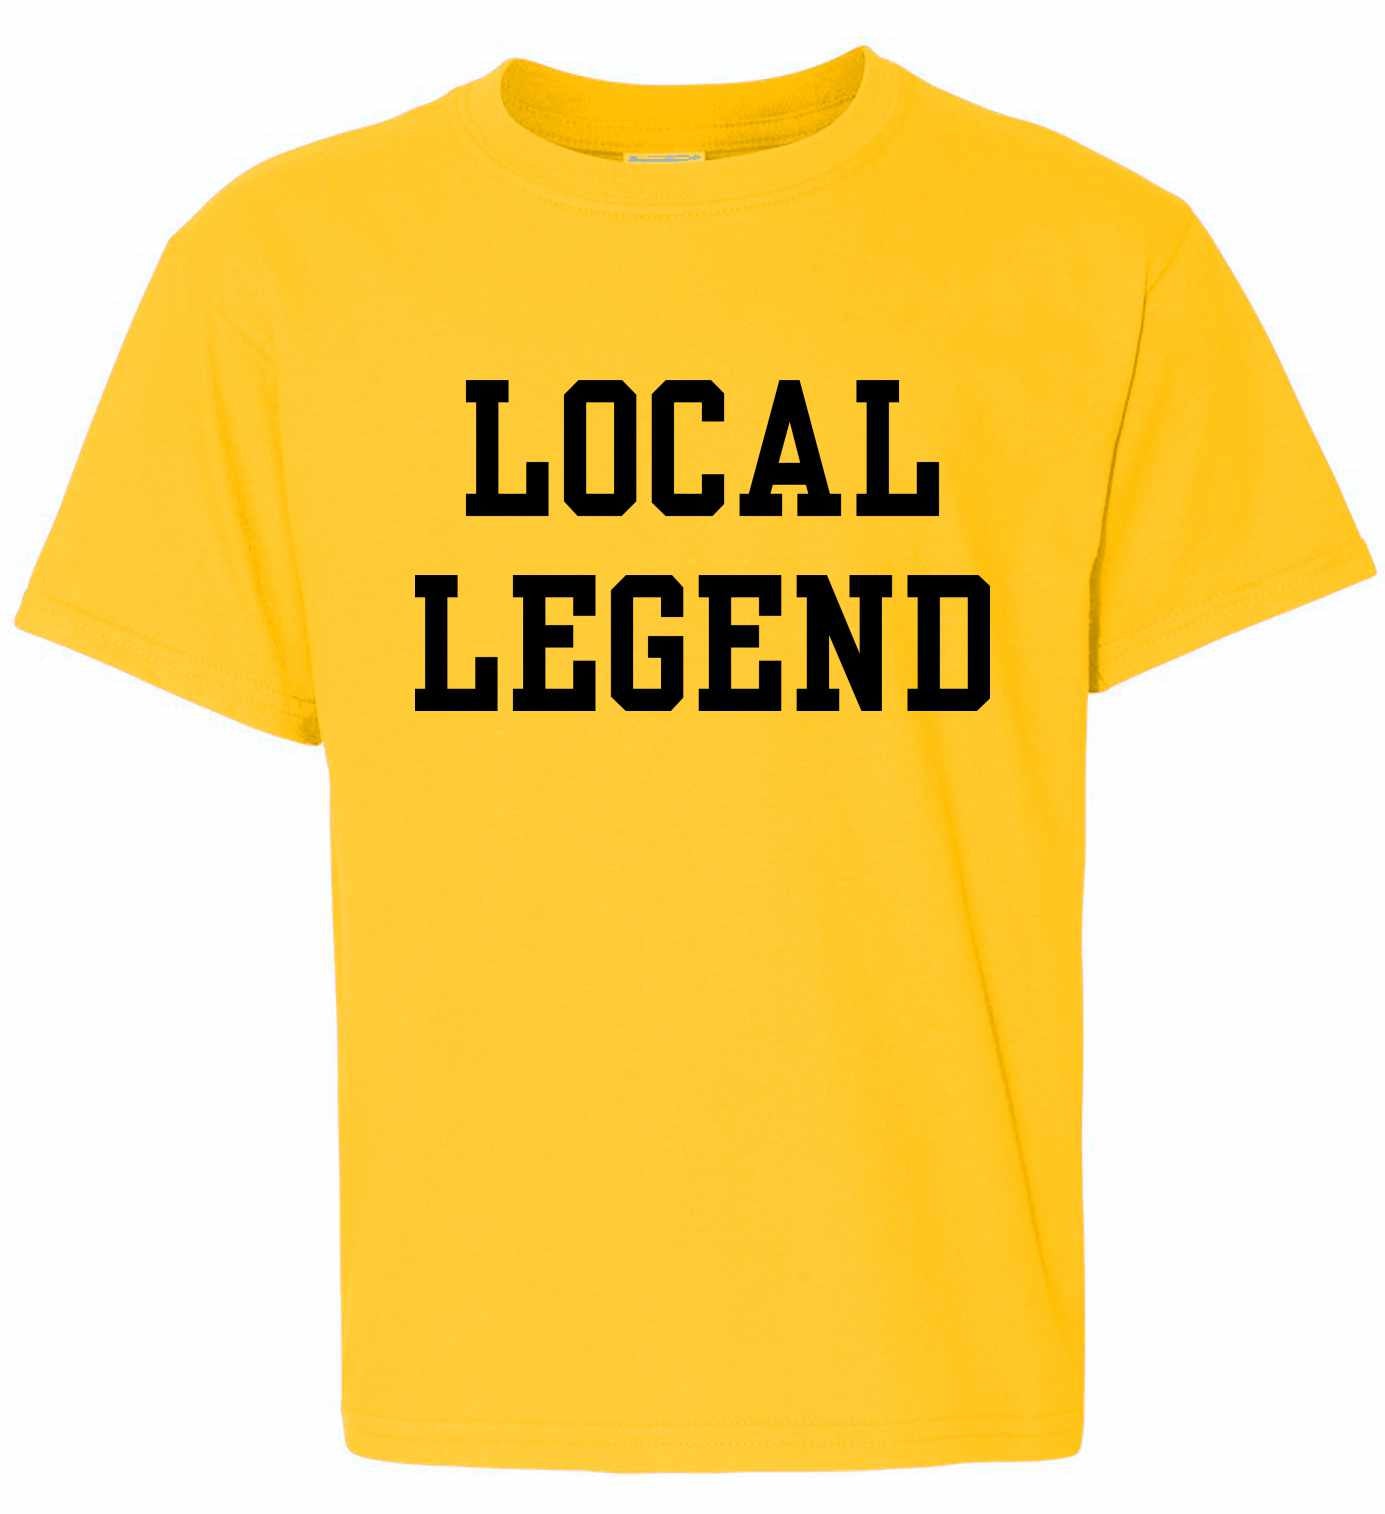 Local Legend on Kids T-Shirt